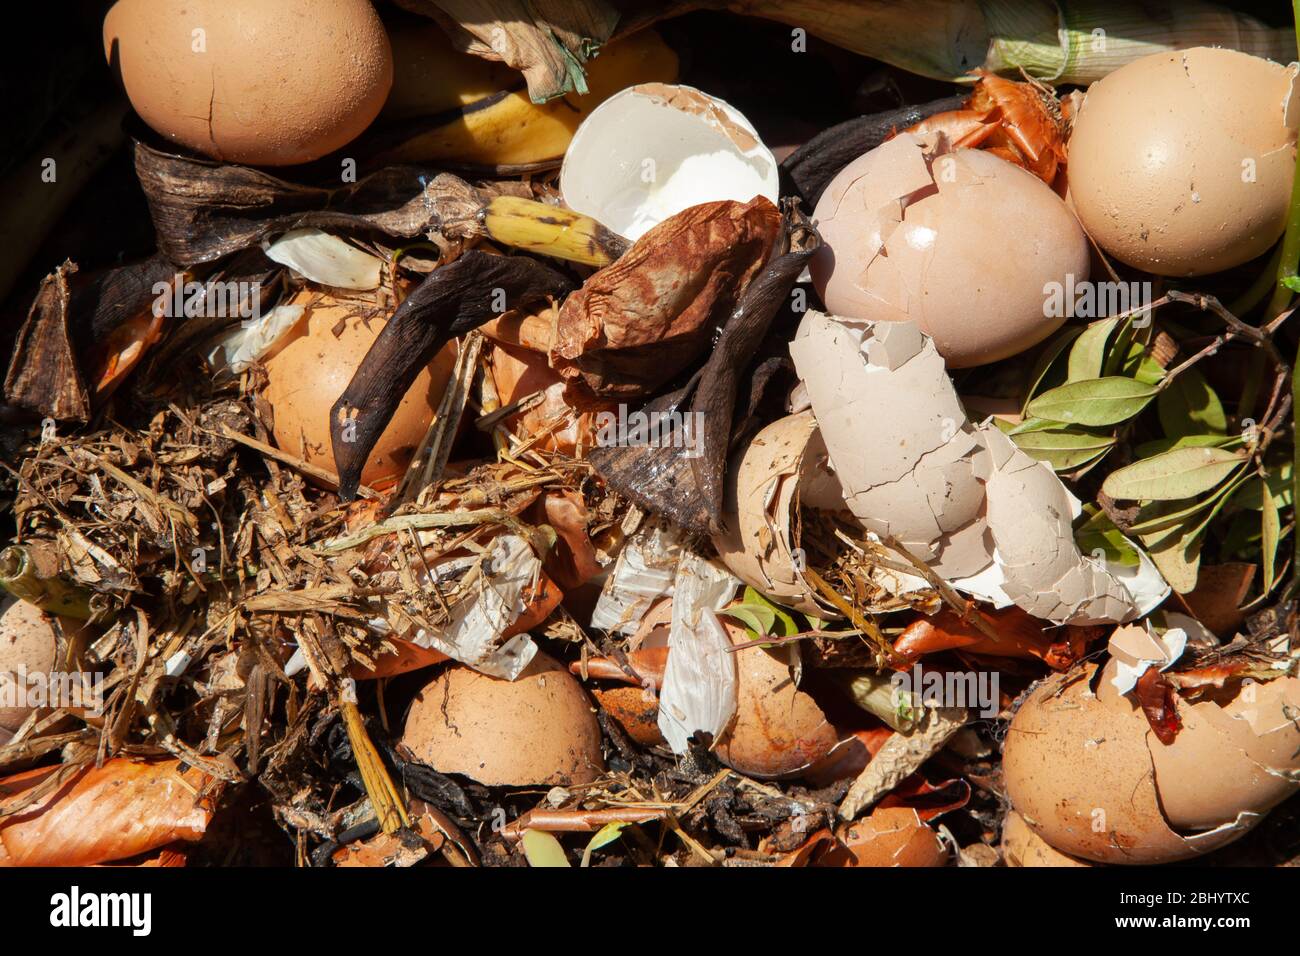 Food waste decomposing in compost bin. British Isles. Stock Photo